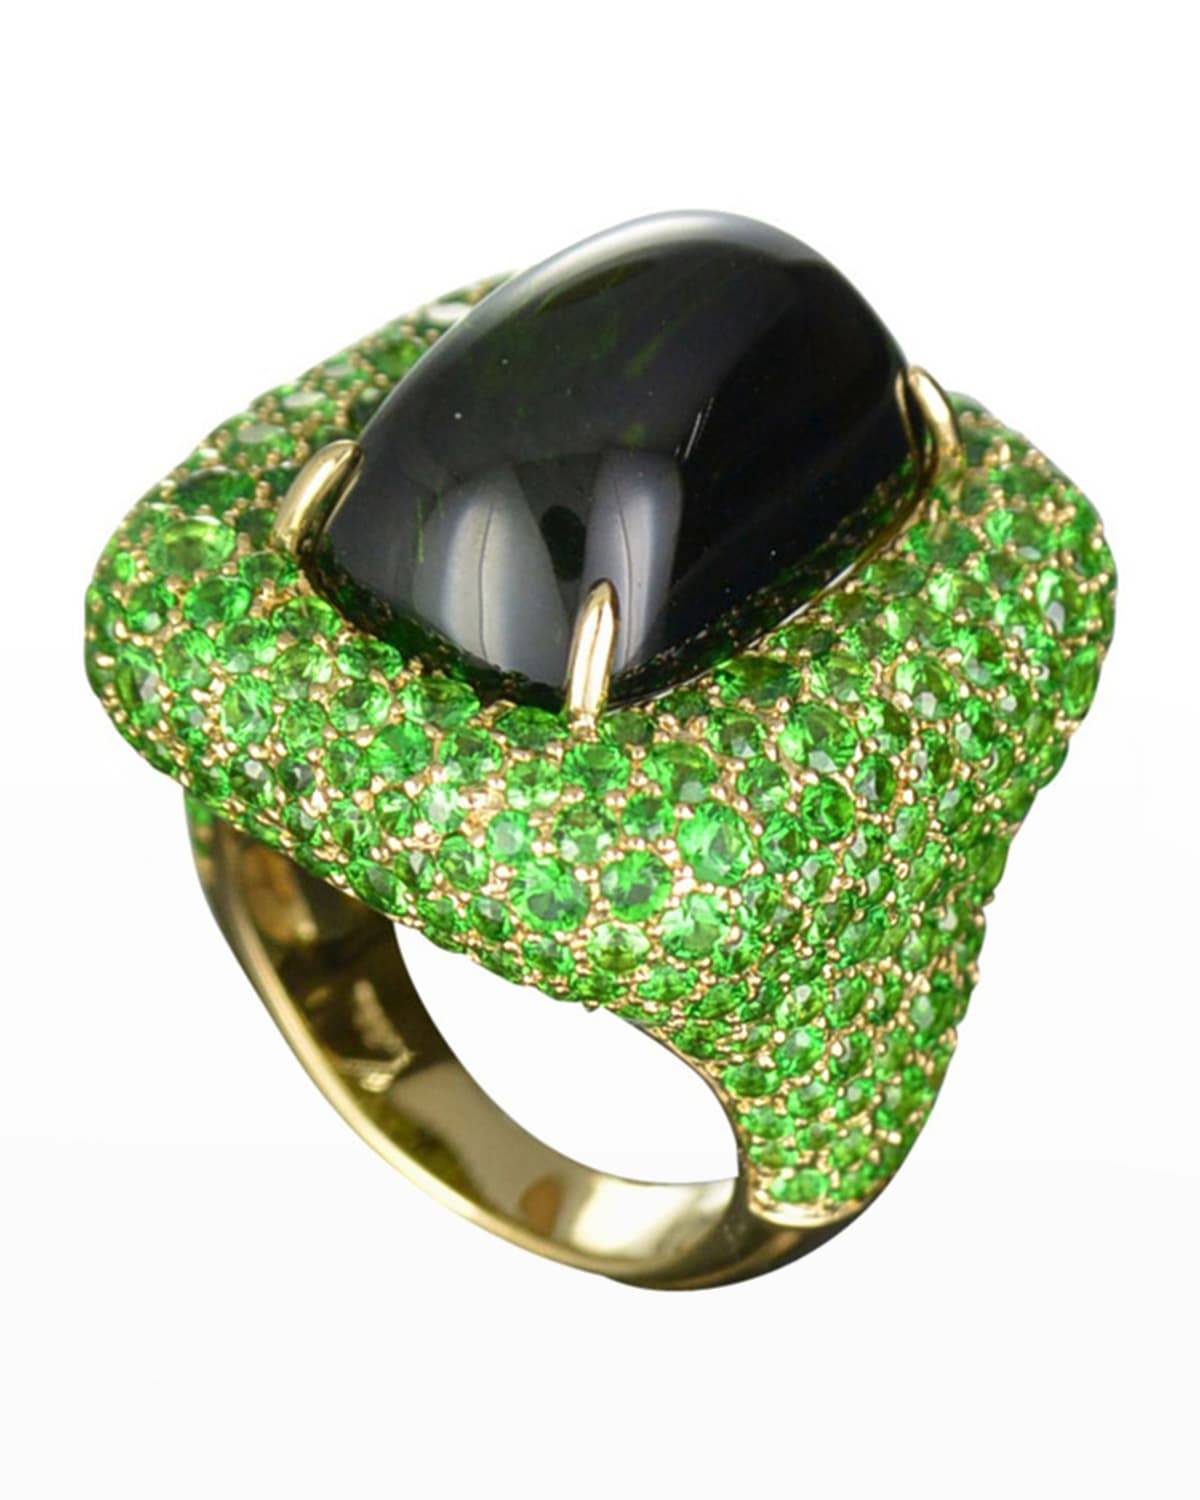 Margot McKinney Jewelry Marbella Green Tourmaline Cabochon Ring in 18K Gold, Size 6.5